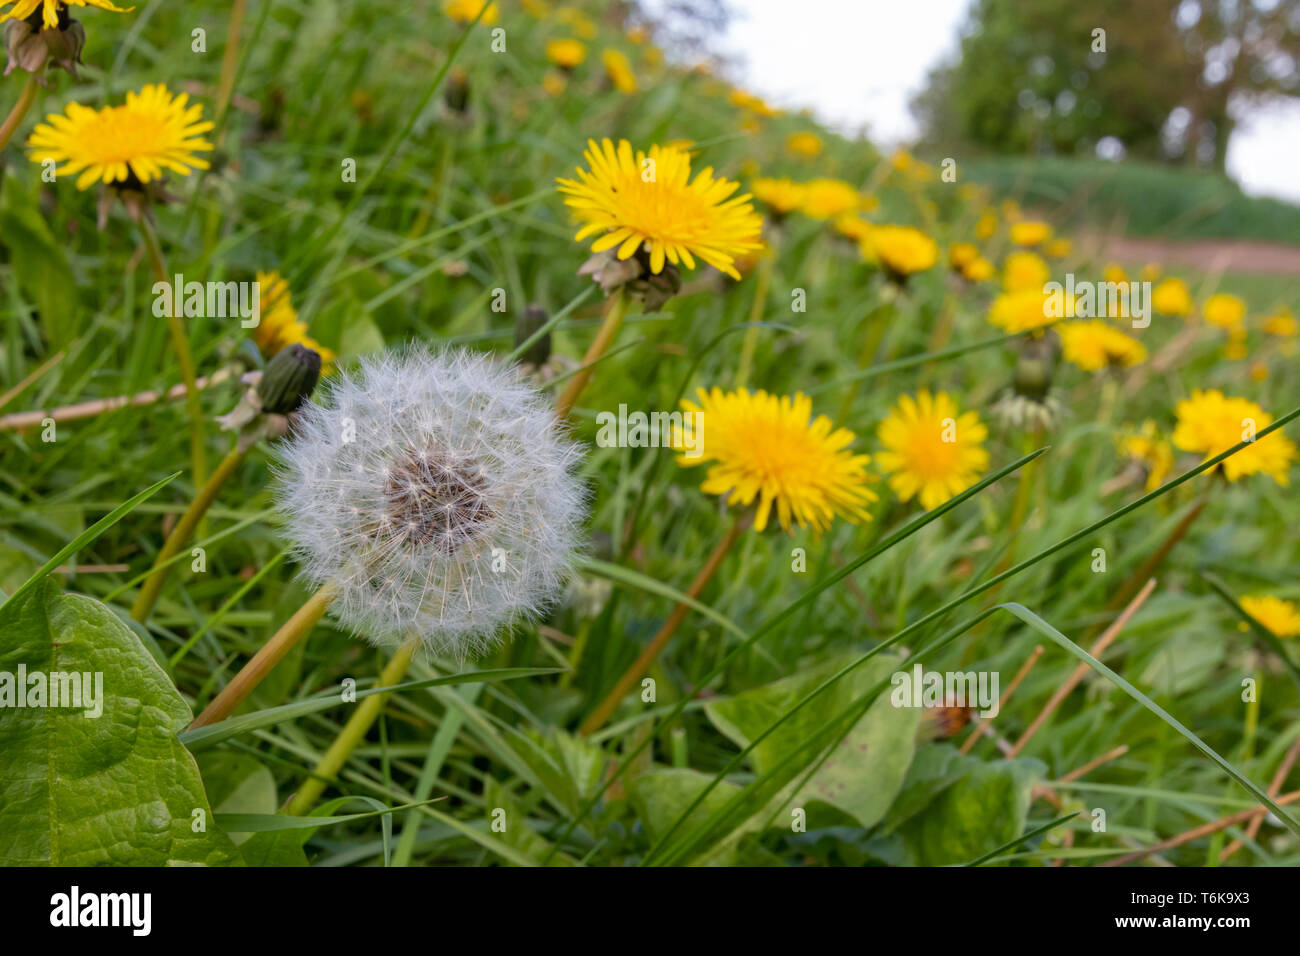 Single Dandelion seed head  growing amongst multiple flower heads on a grassy bank Stock Photo